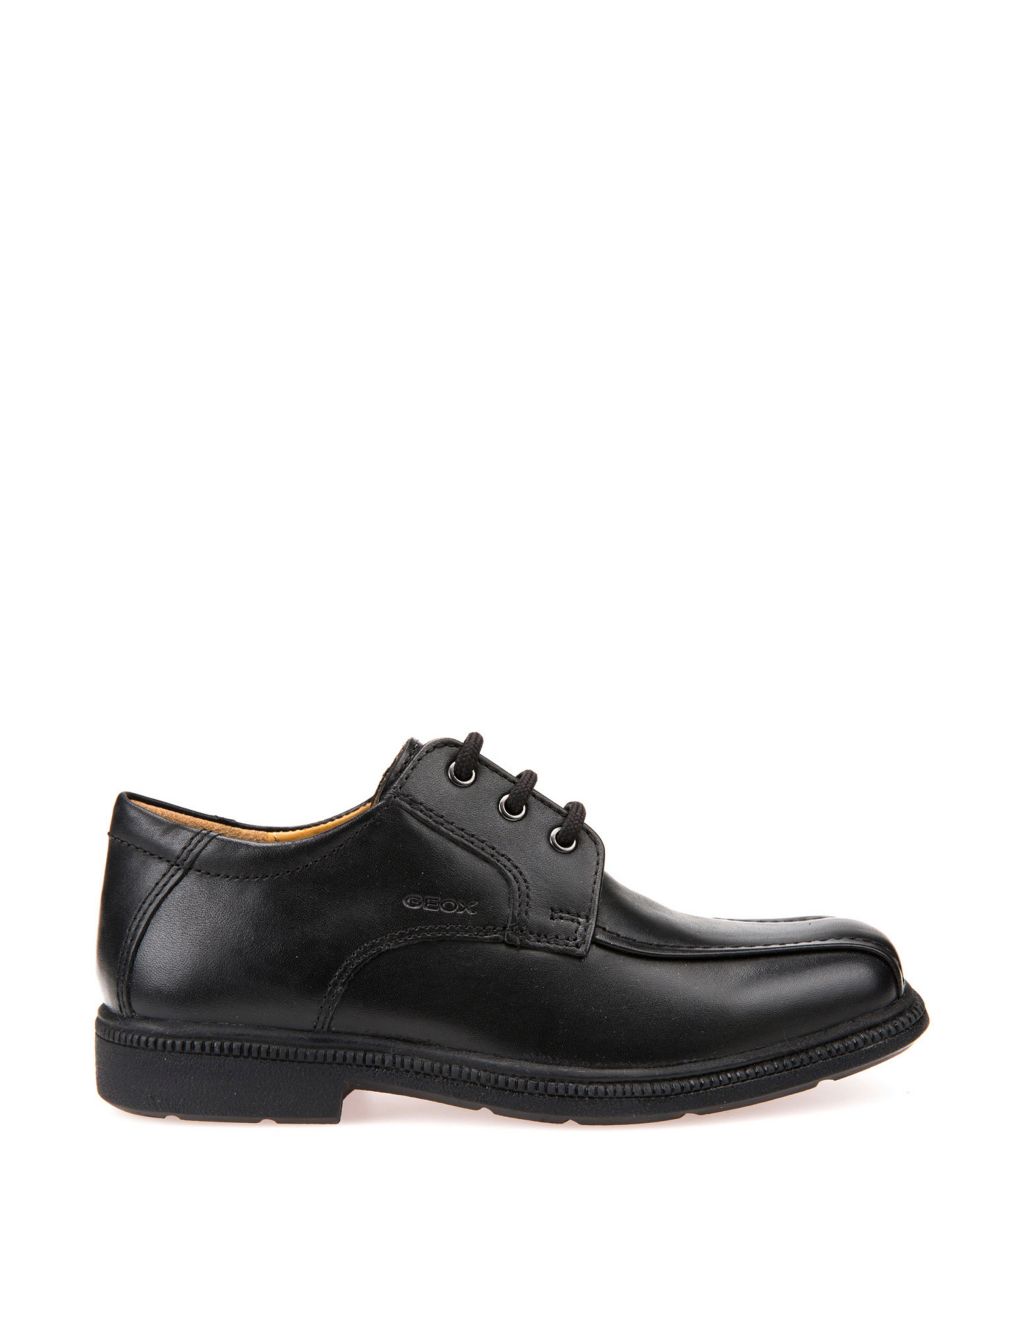 Leather School Shoes (2½ Large-8 Large) image 1